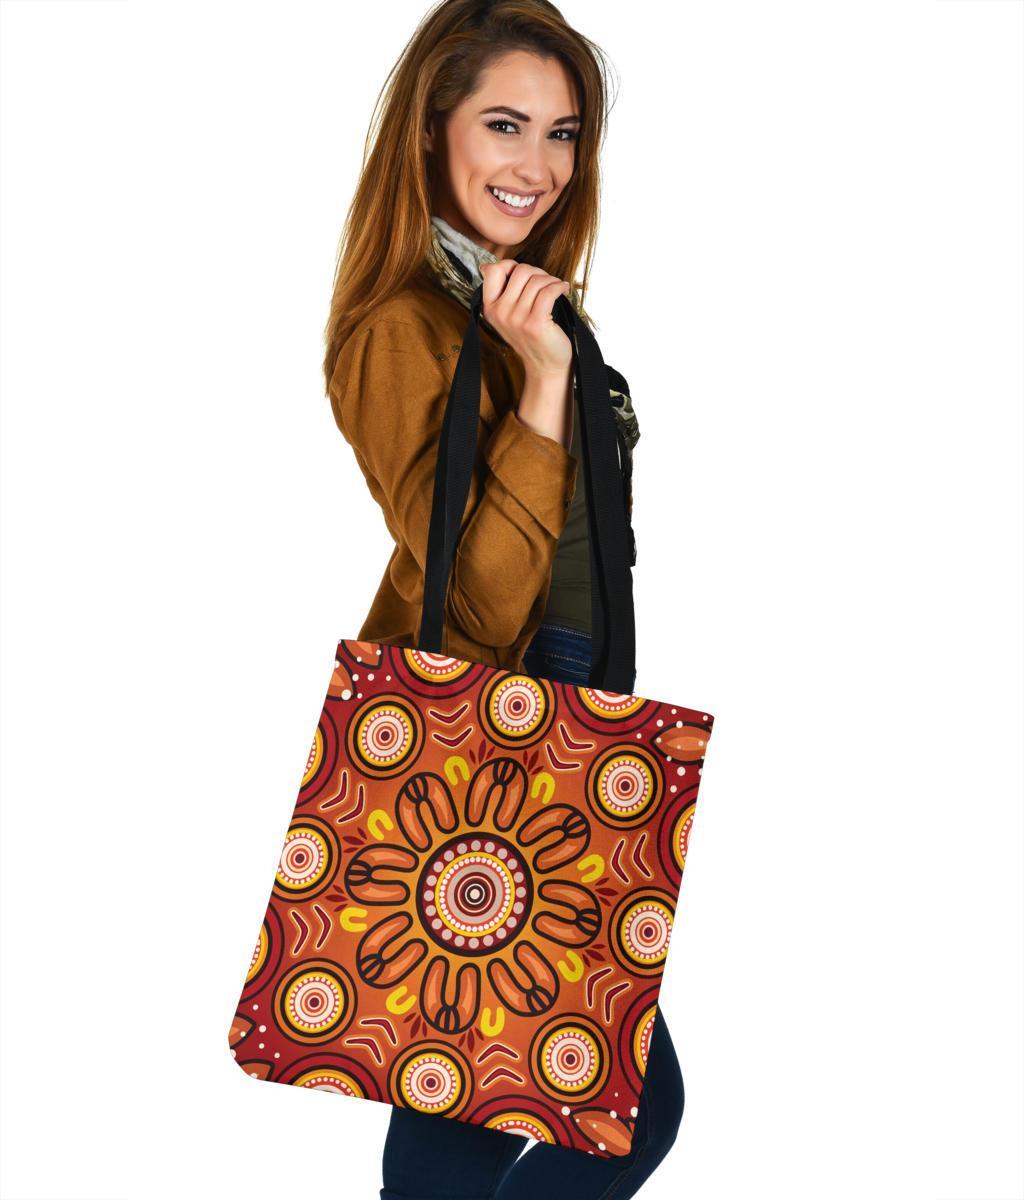 aboriginal-tote-bags-circle-flowers-patterns-ver01